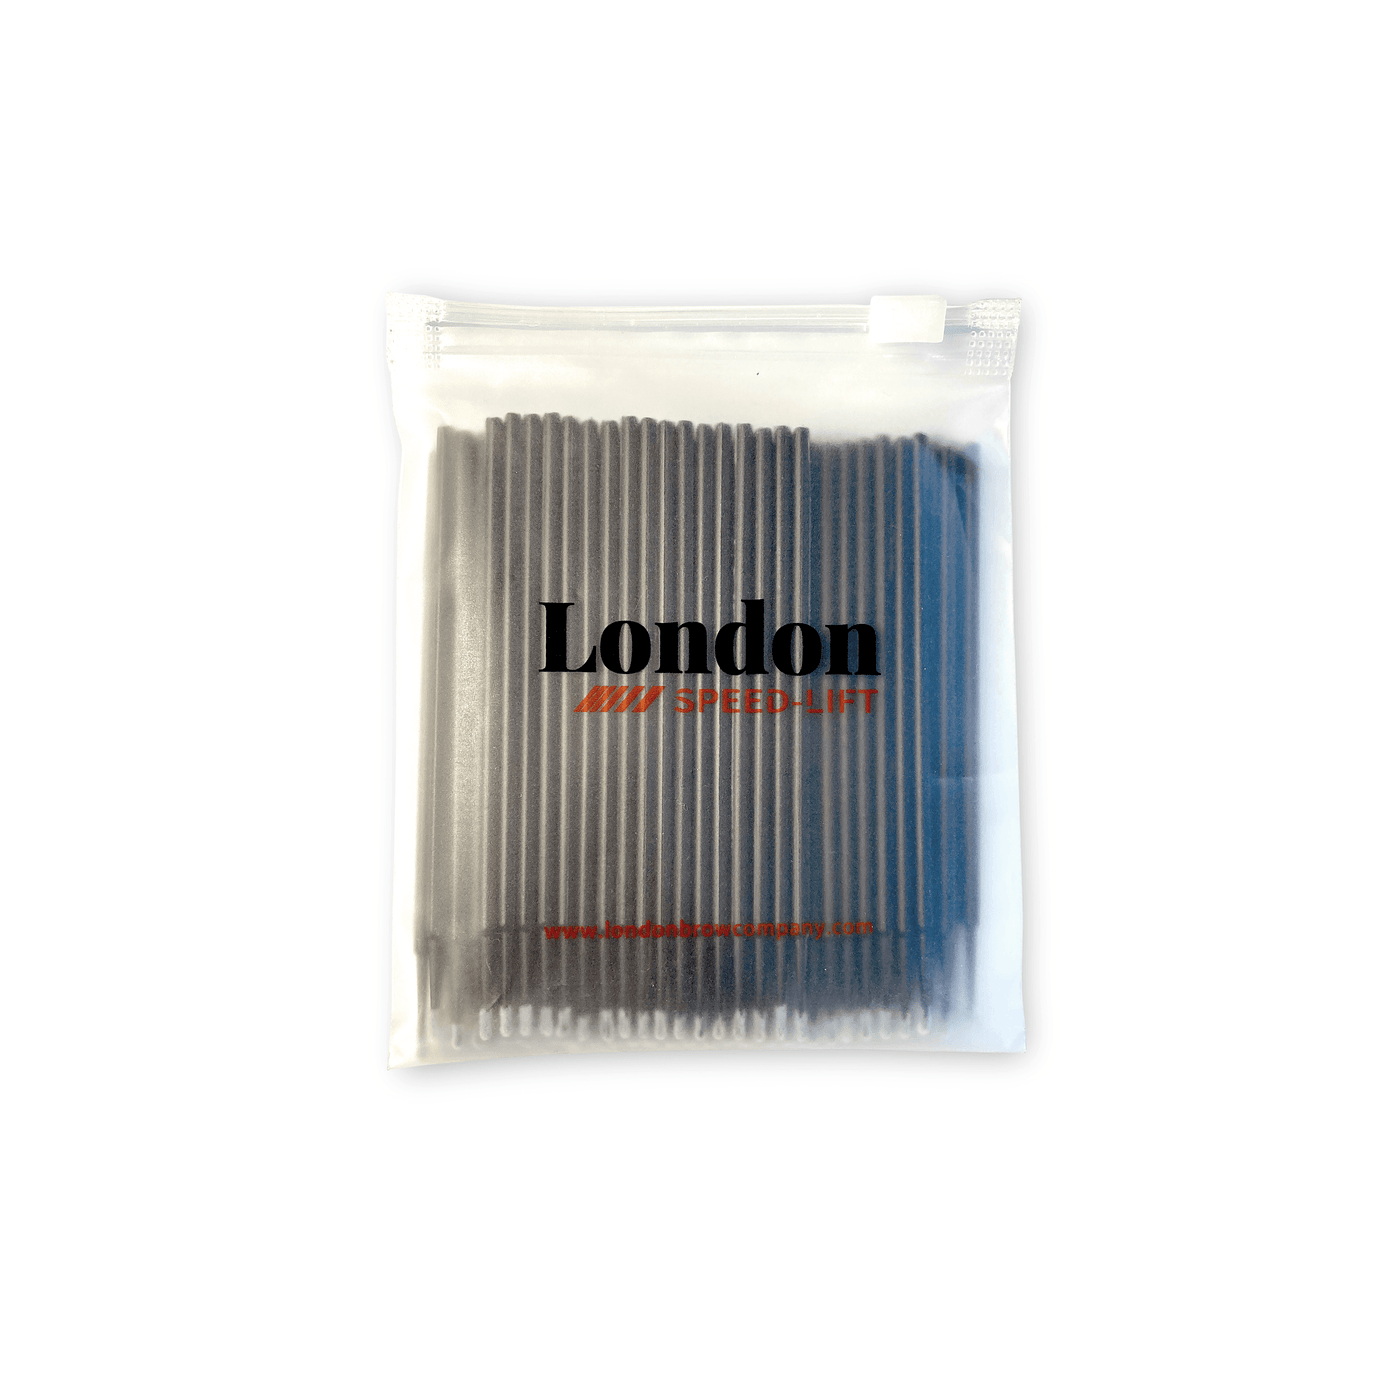 London Speed-Lift Black Microfiber Applicators - The London Brow Company